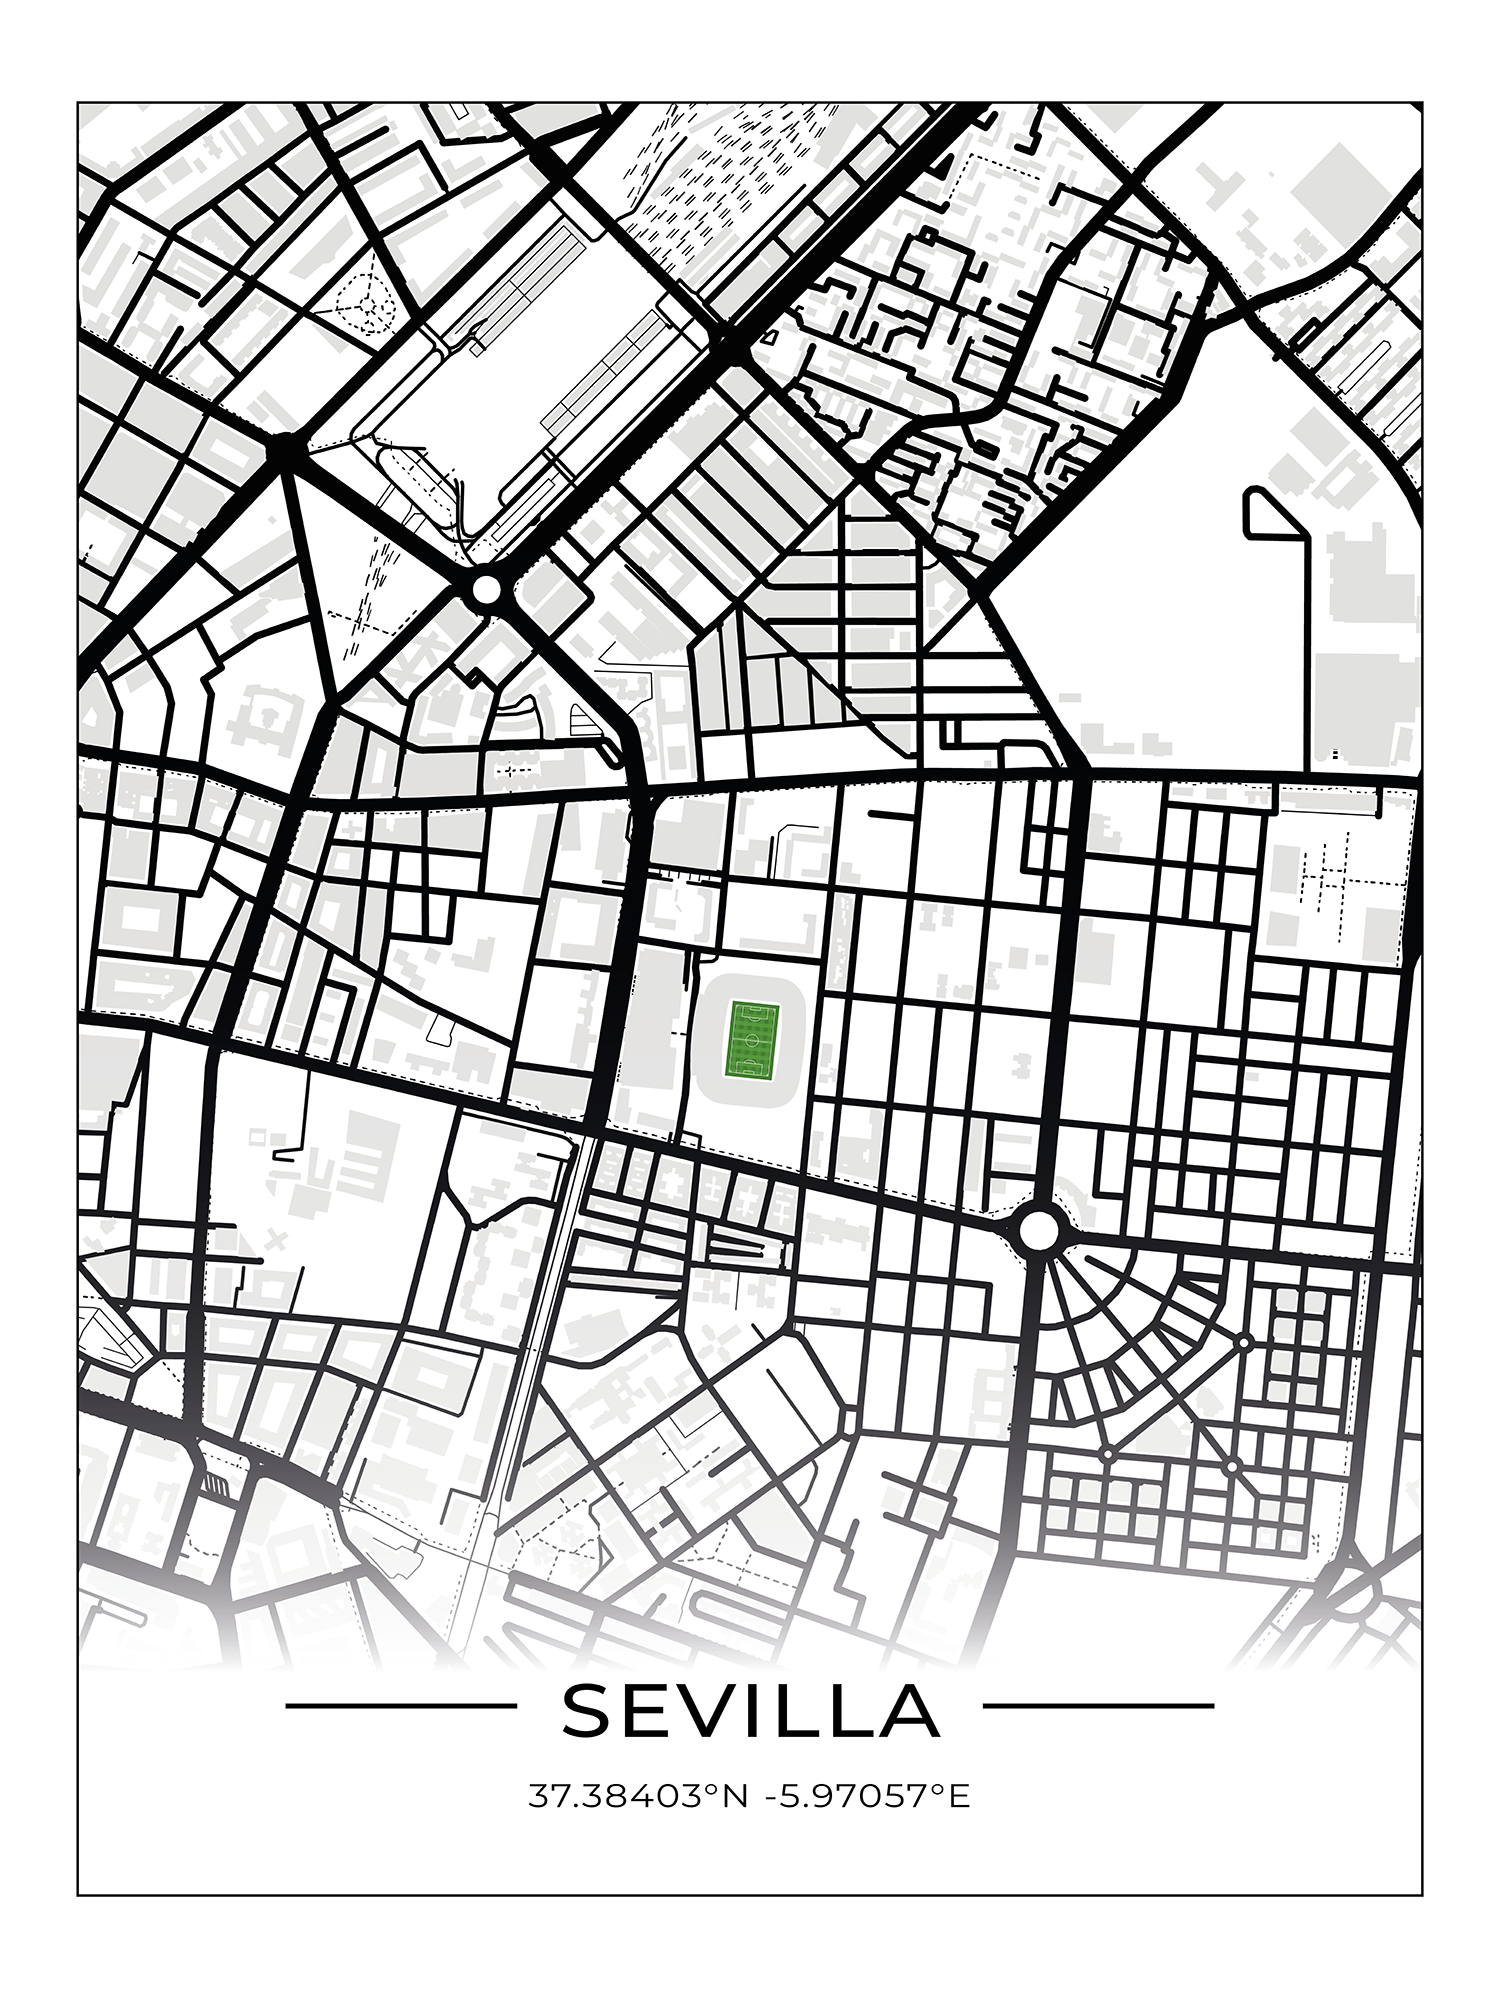 Stadion Poster Sevilla - Estadio Ramón Sánchez Pizjuán